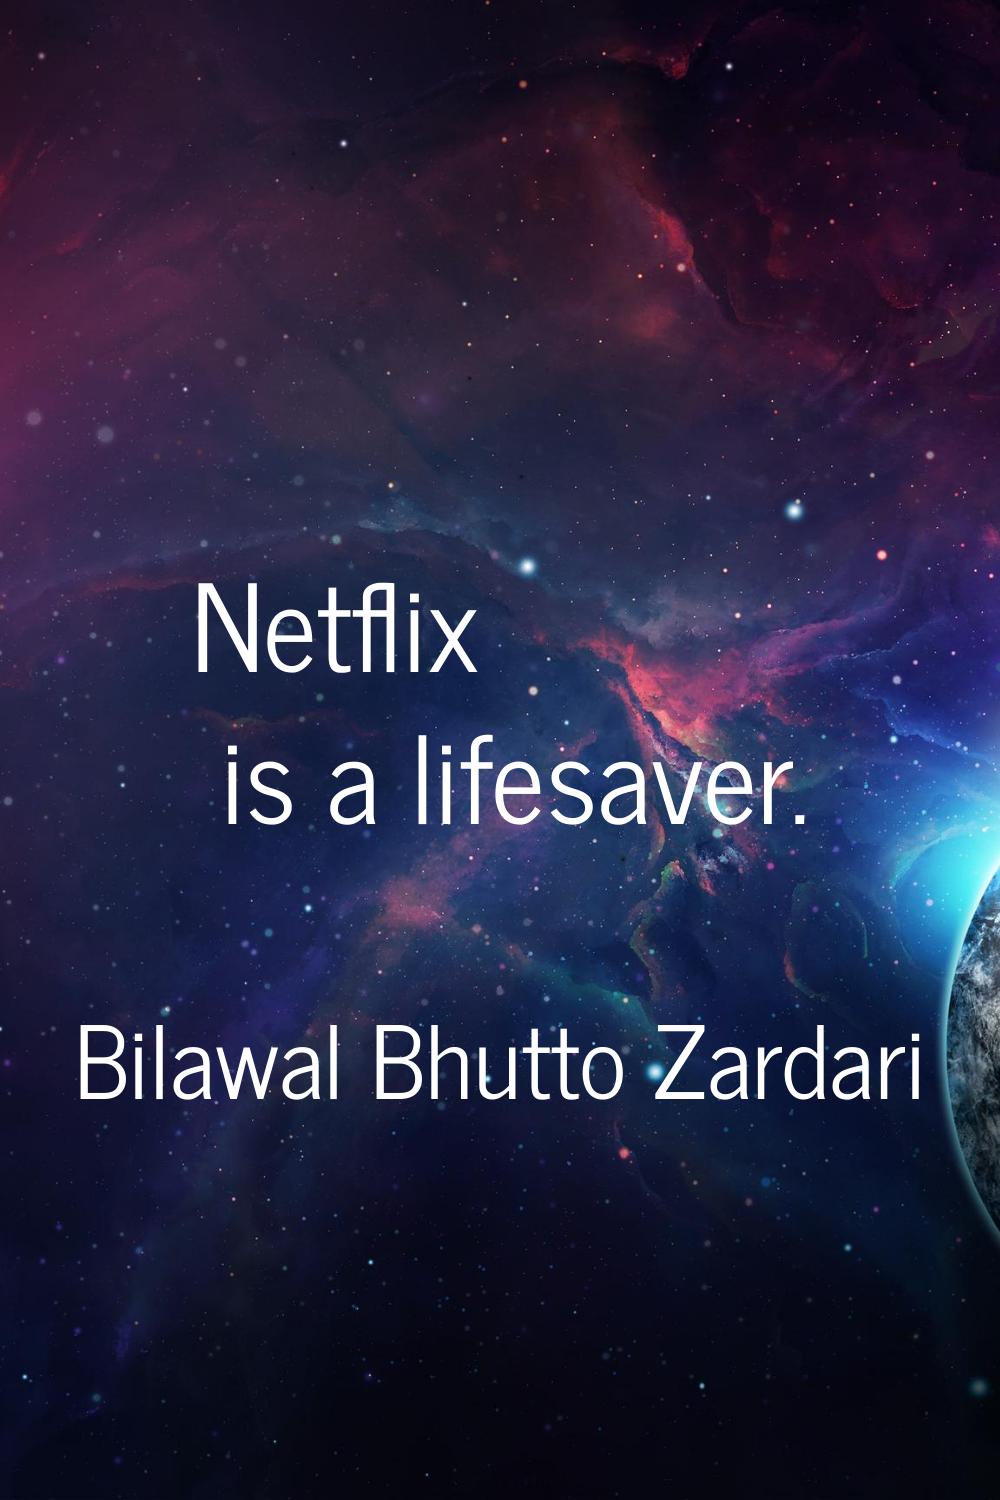 Netflix is a lifesaver.